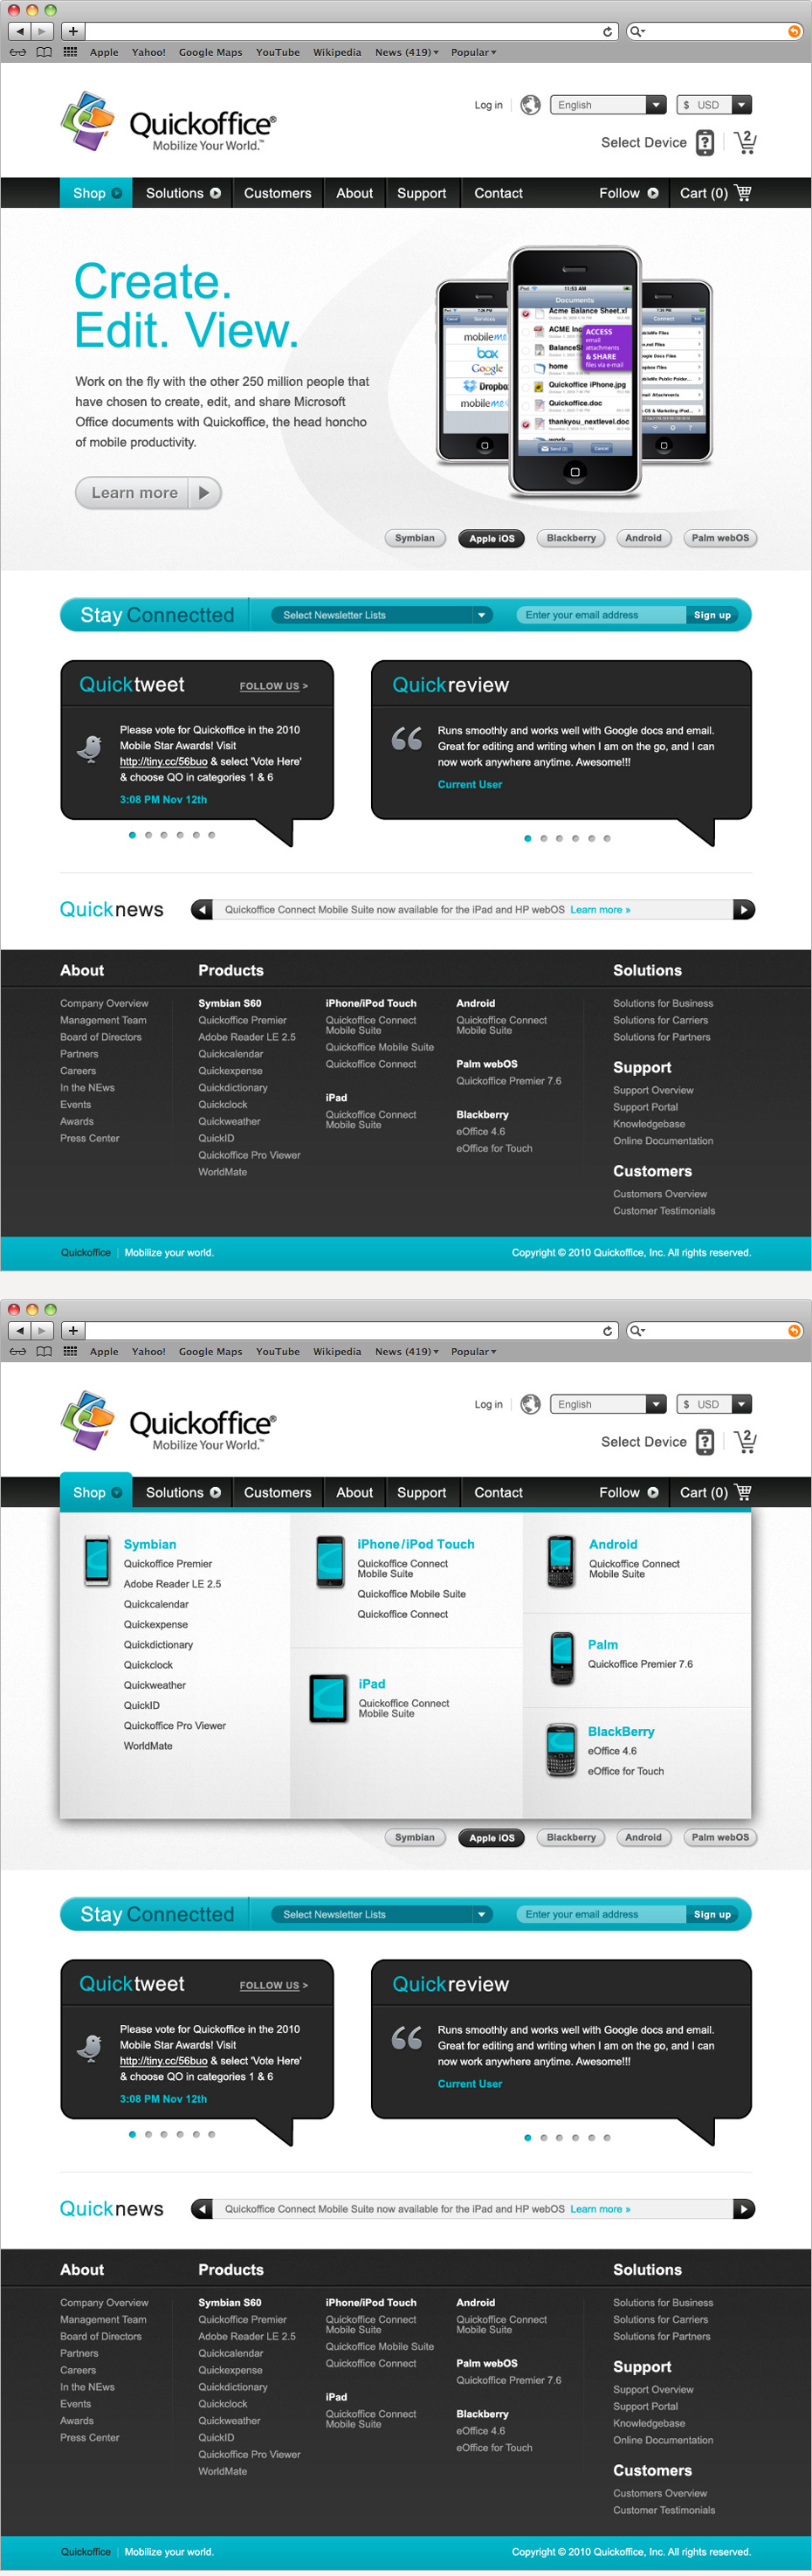 Quickoffice Website Homepage & Shopping Nav